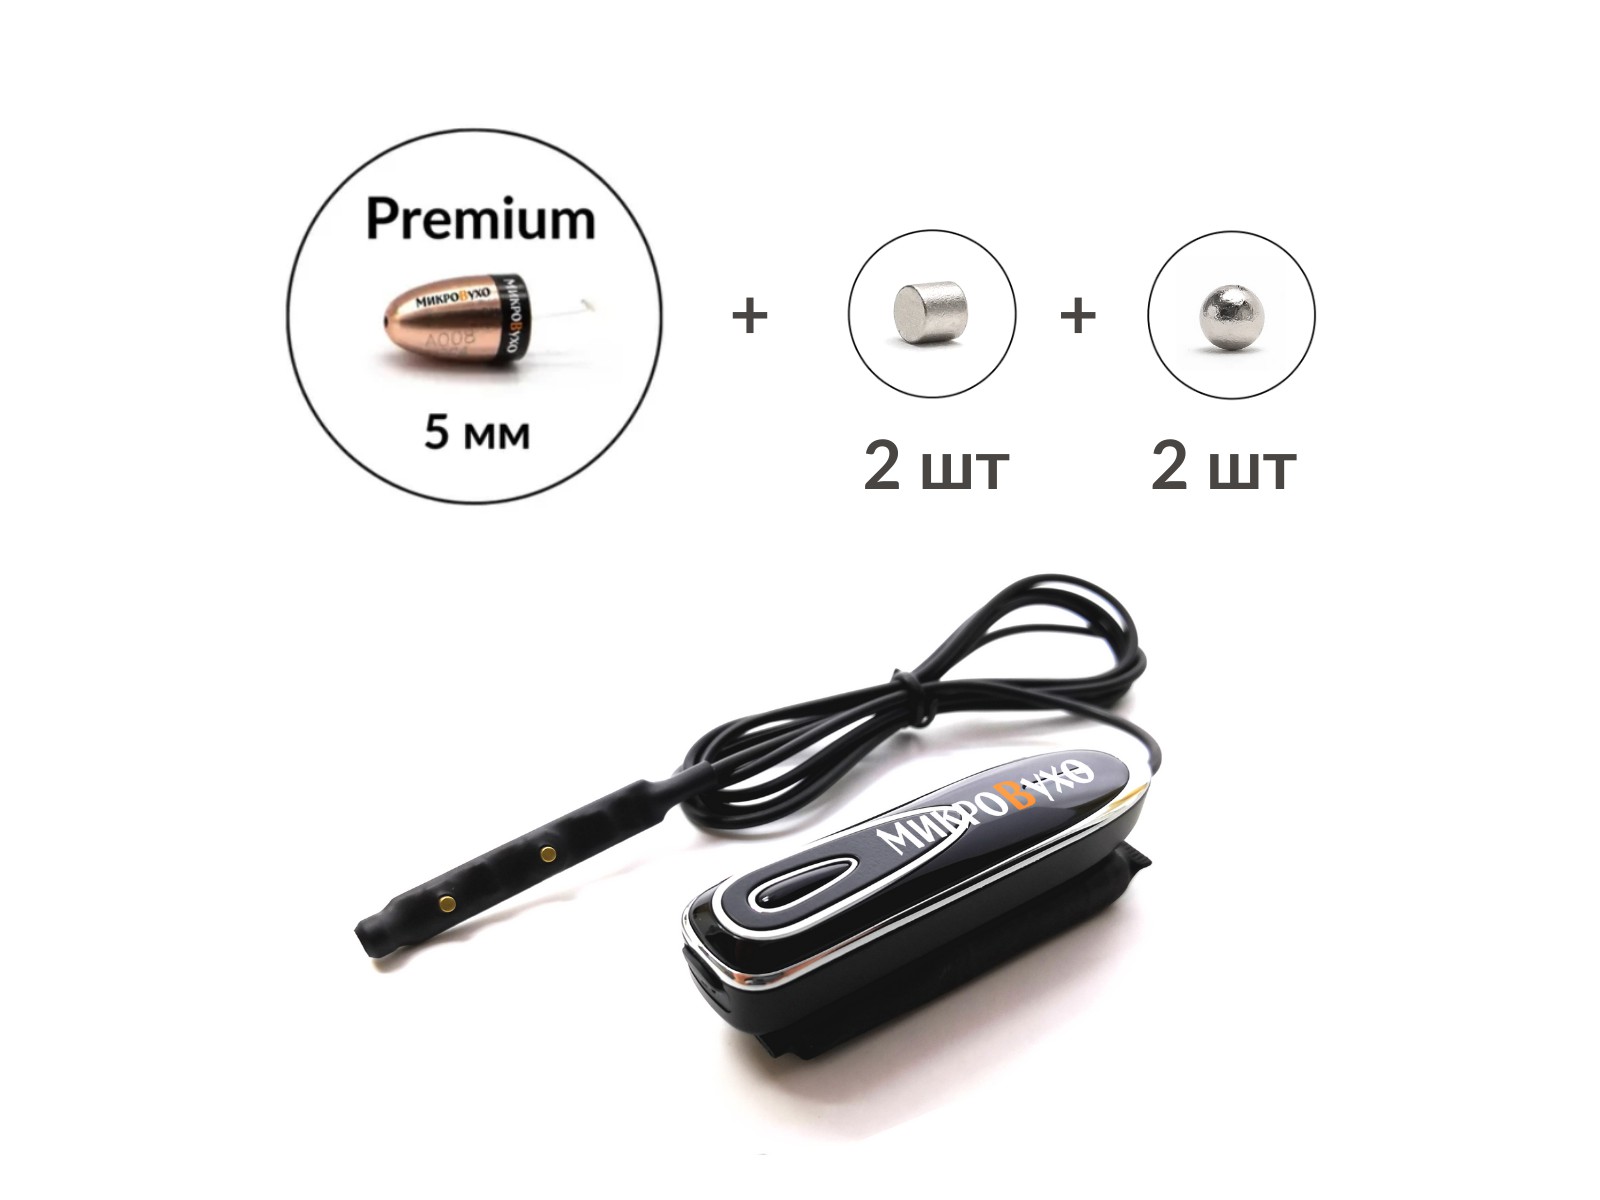 Аренда микронаушника Bluetooth Box Premier Plus с капсулой К5 4 мм и магнитами 2 мм 2